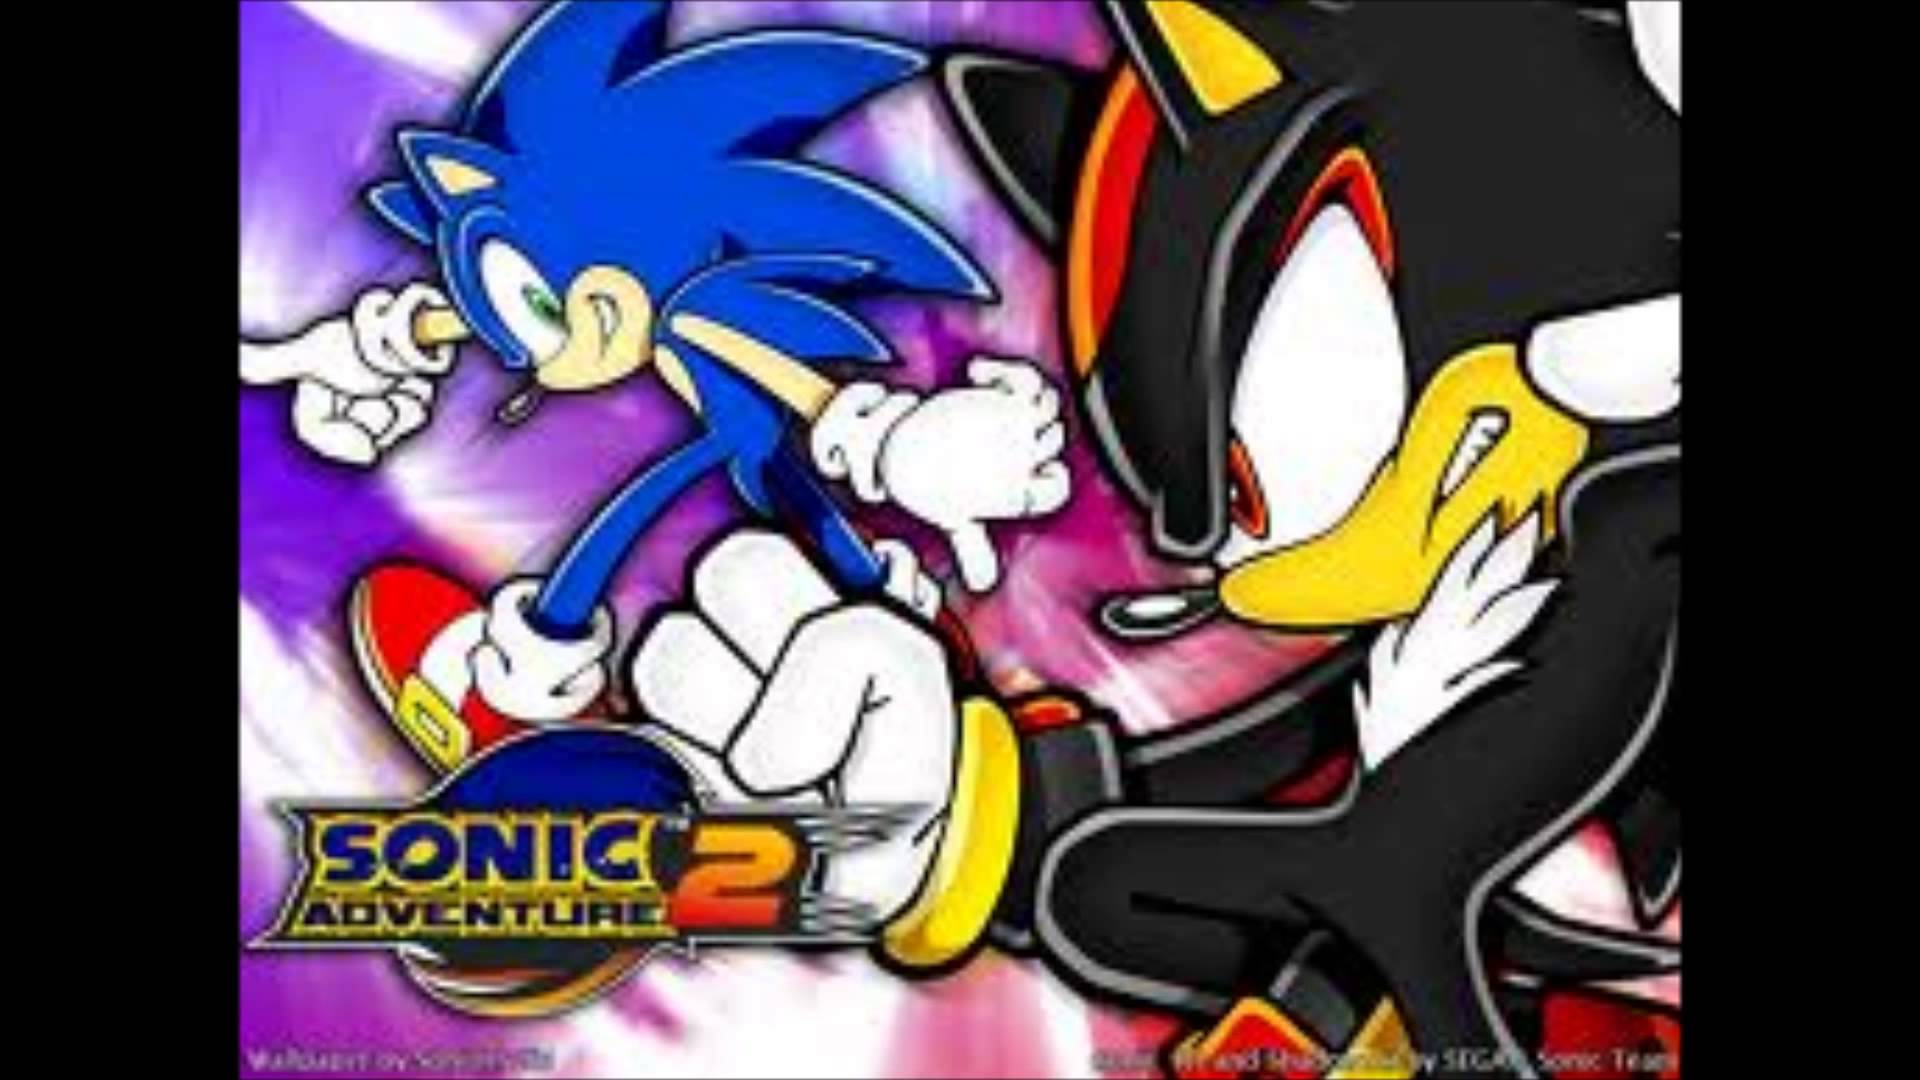 It Doesn't Matter Remix(Sonic Adventure 2 Battle)